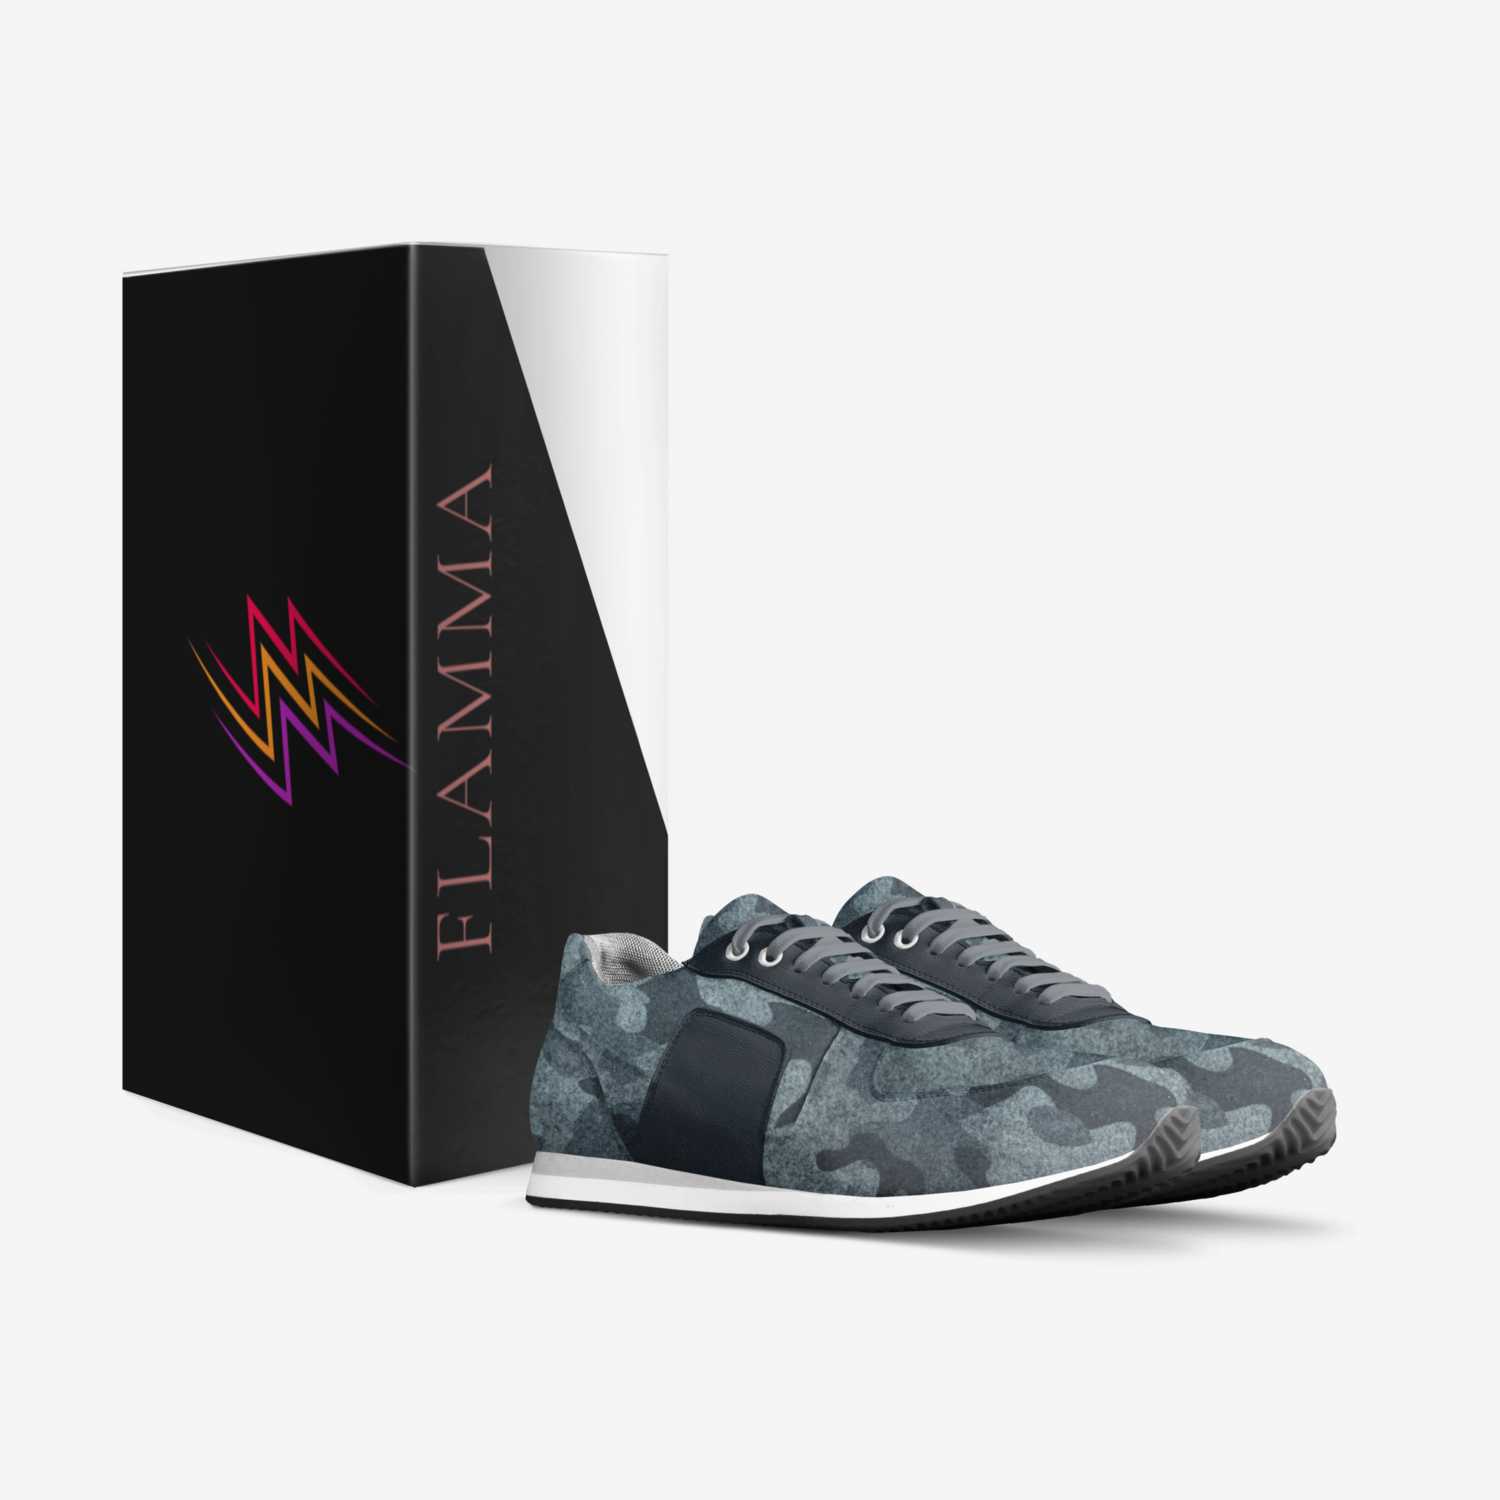 FLAMMA103 custom made in Italy shoes by Tornike Obolashvili | Box view